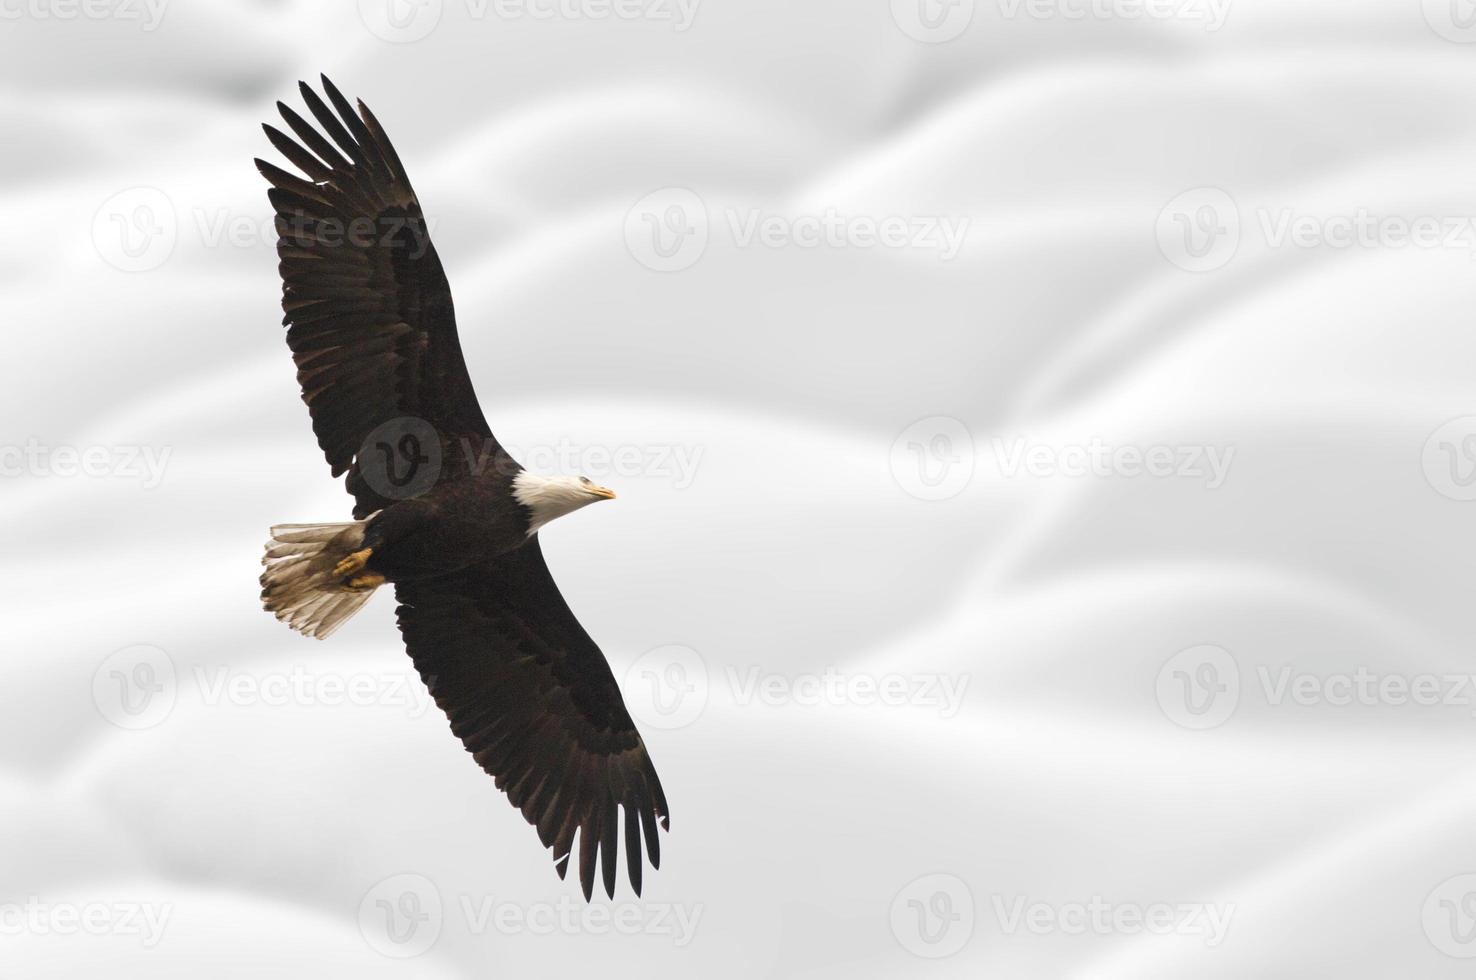 águila calva columbia británica en vuelo foto